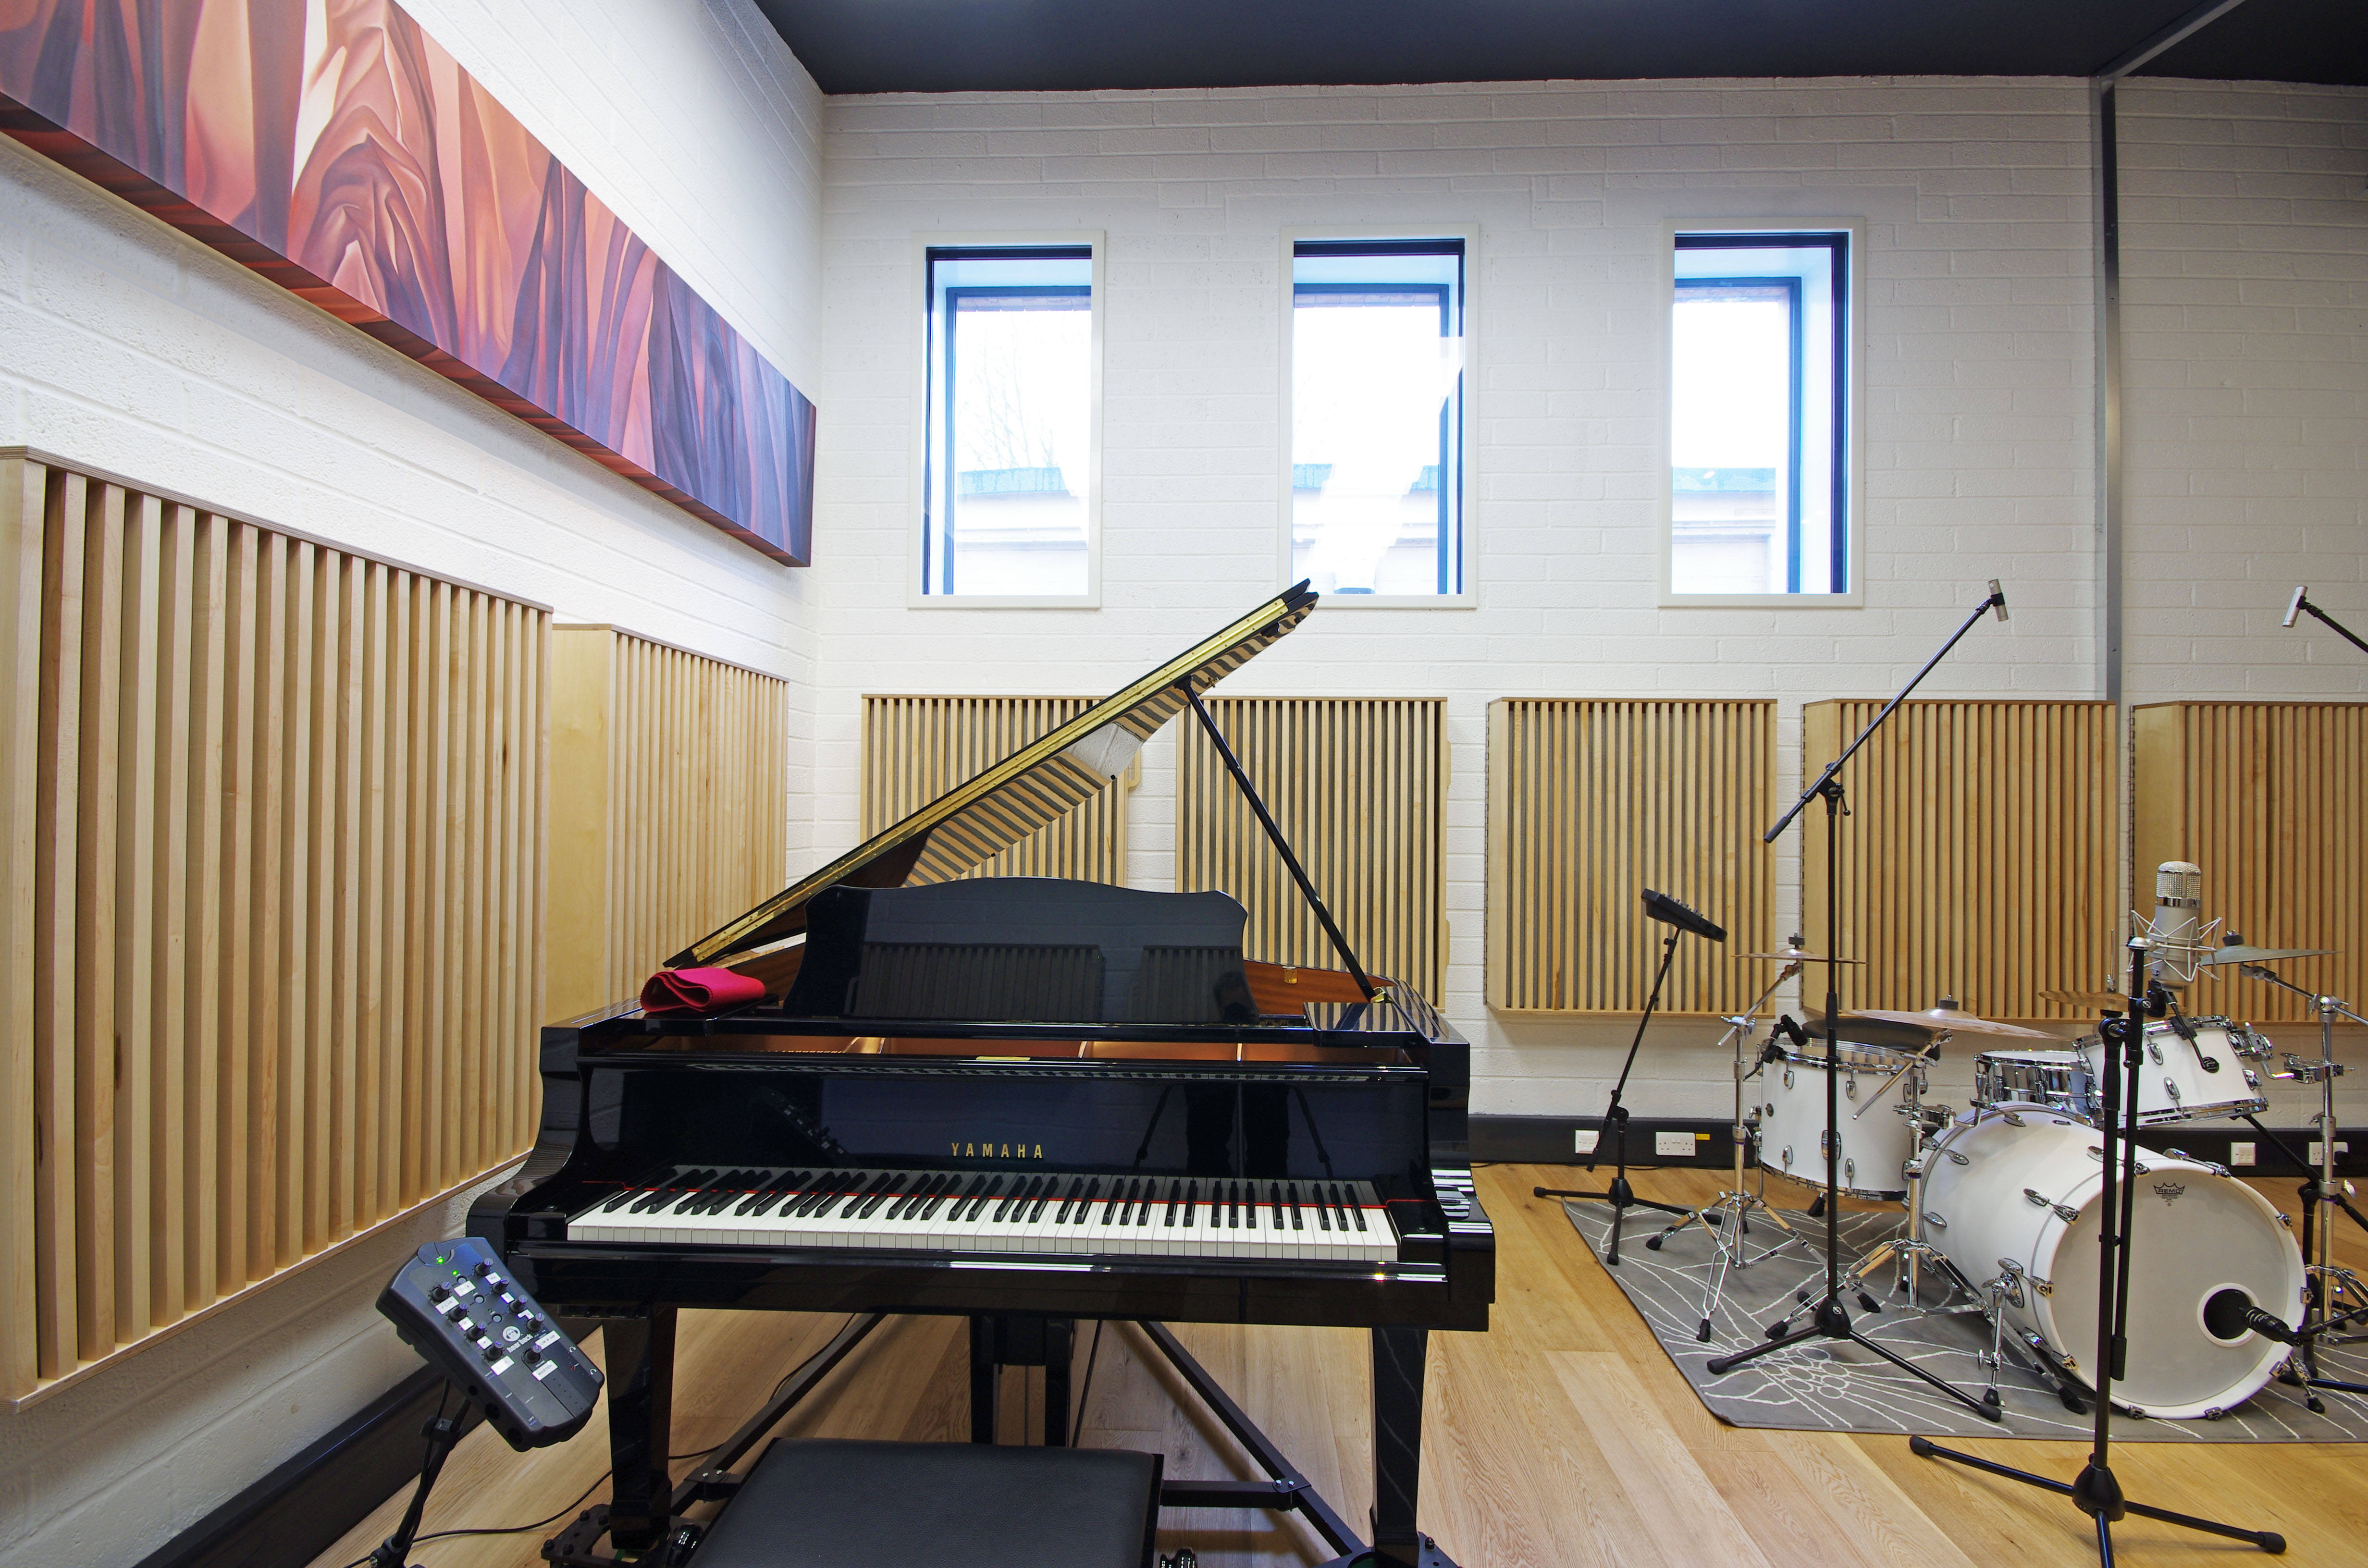 A rehearsal room including a piano